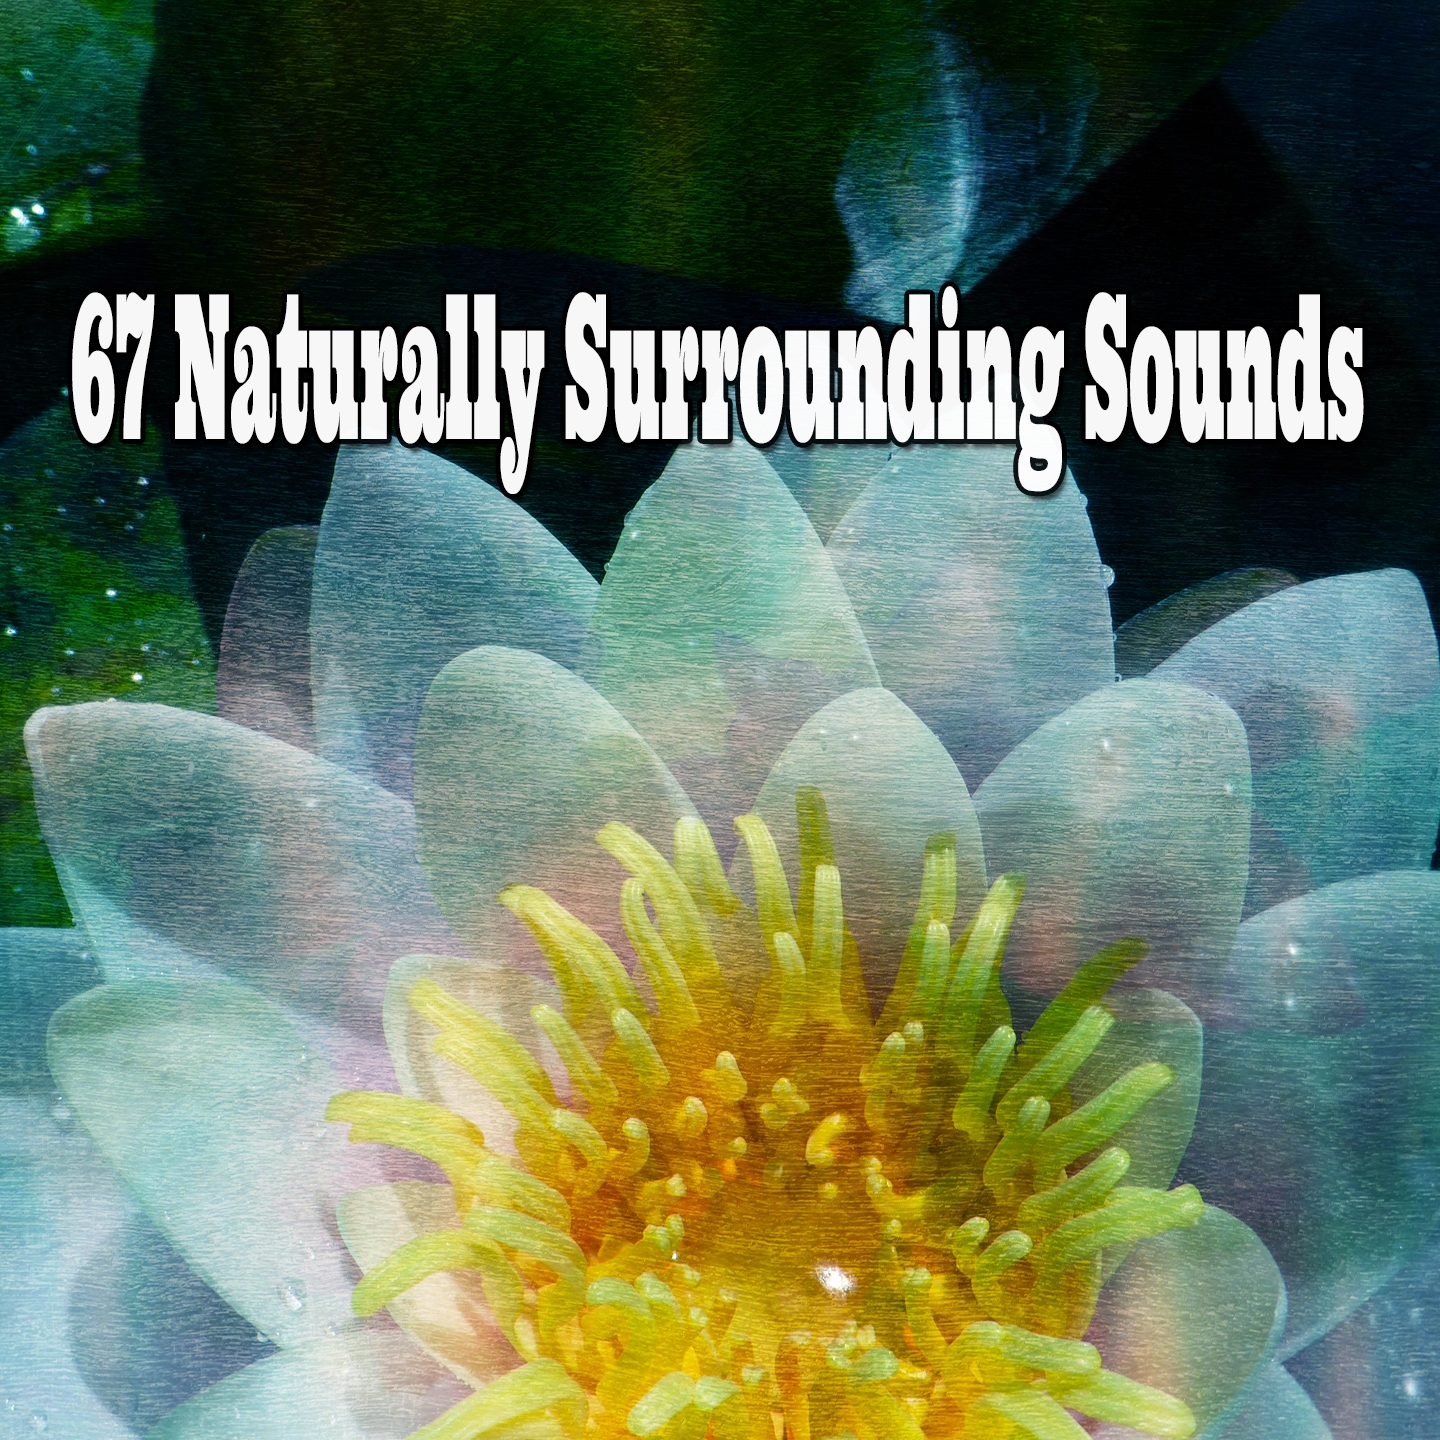 67 Naturally Surrounding Sounds